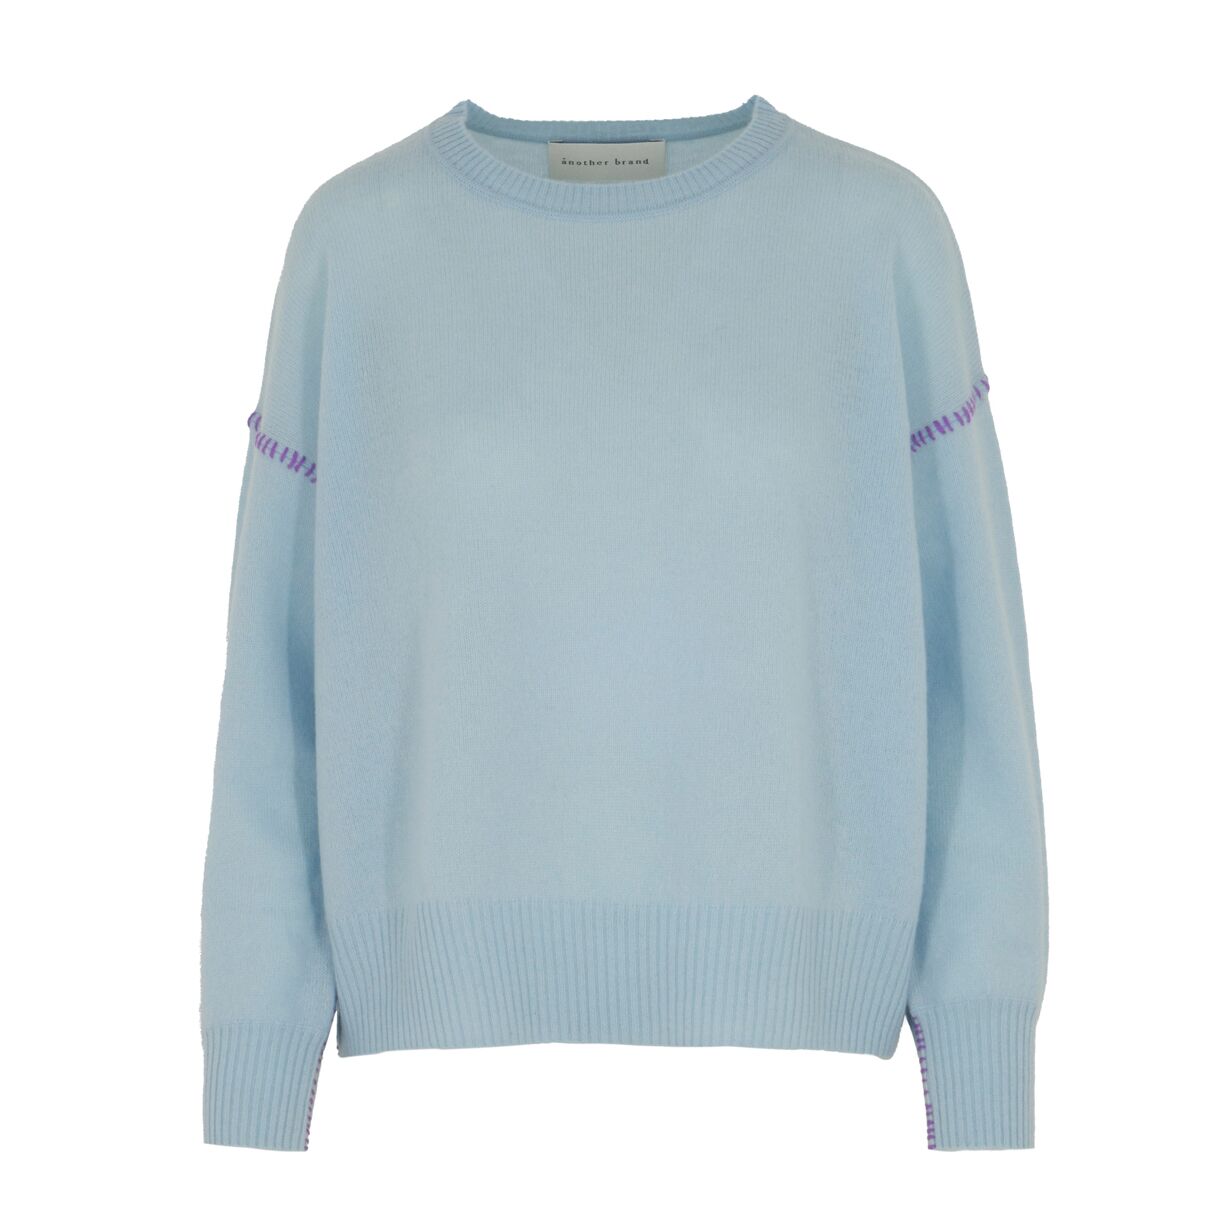 714002 Another Brand Pullover Kaschmir Sweater Sontrast Stitch (4)